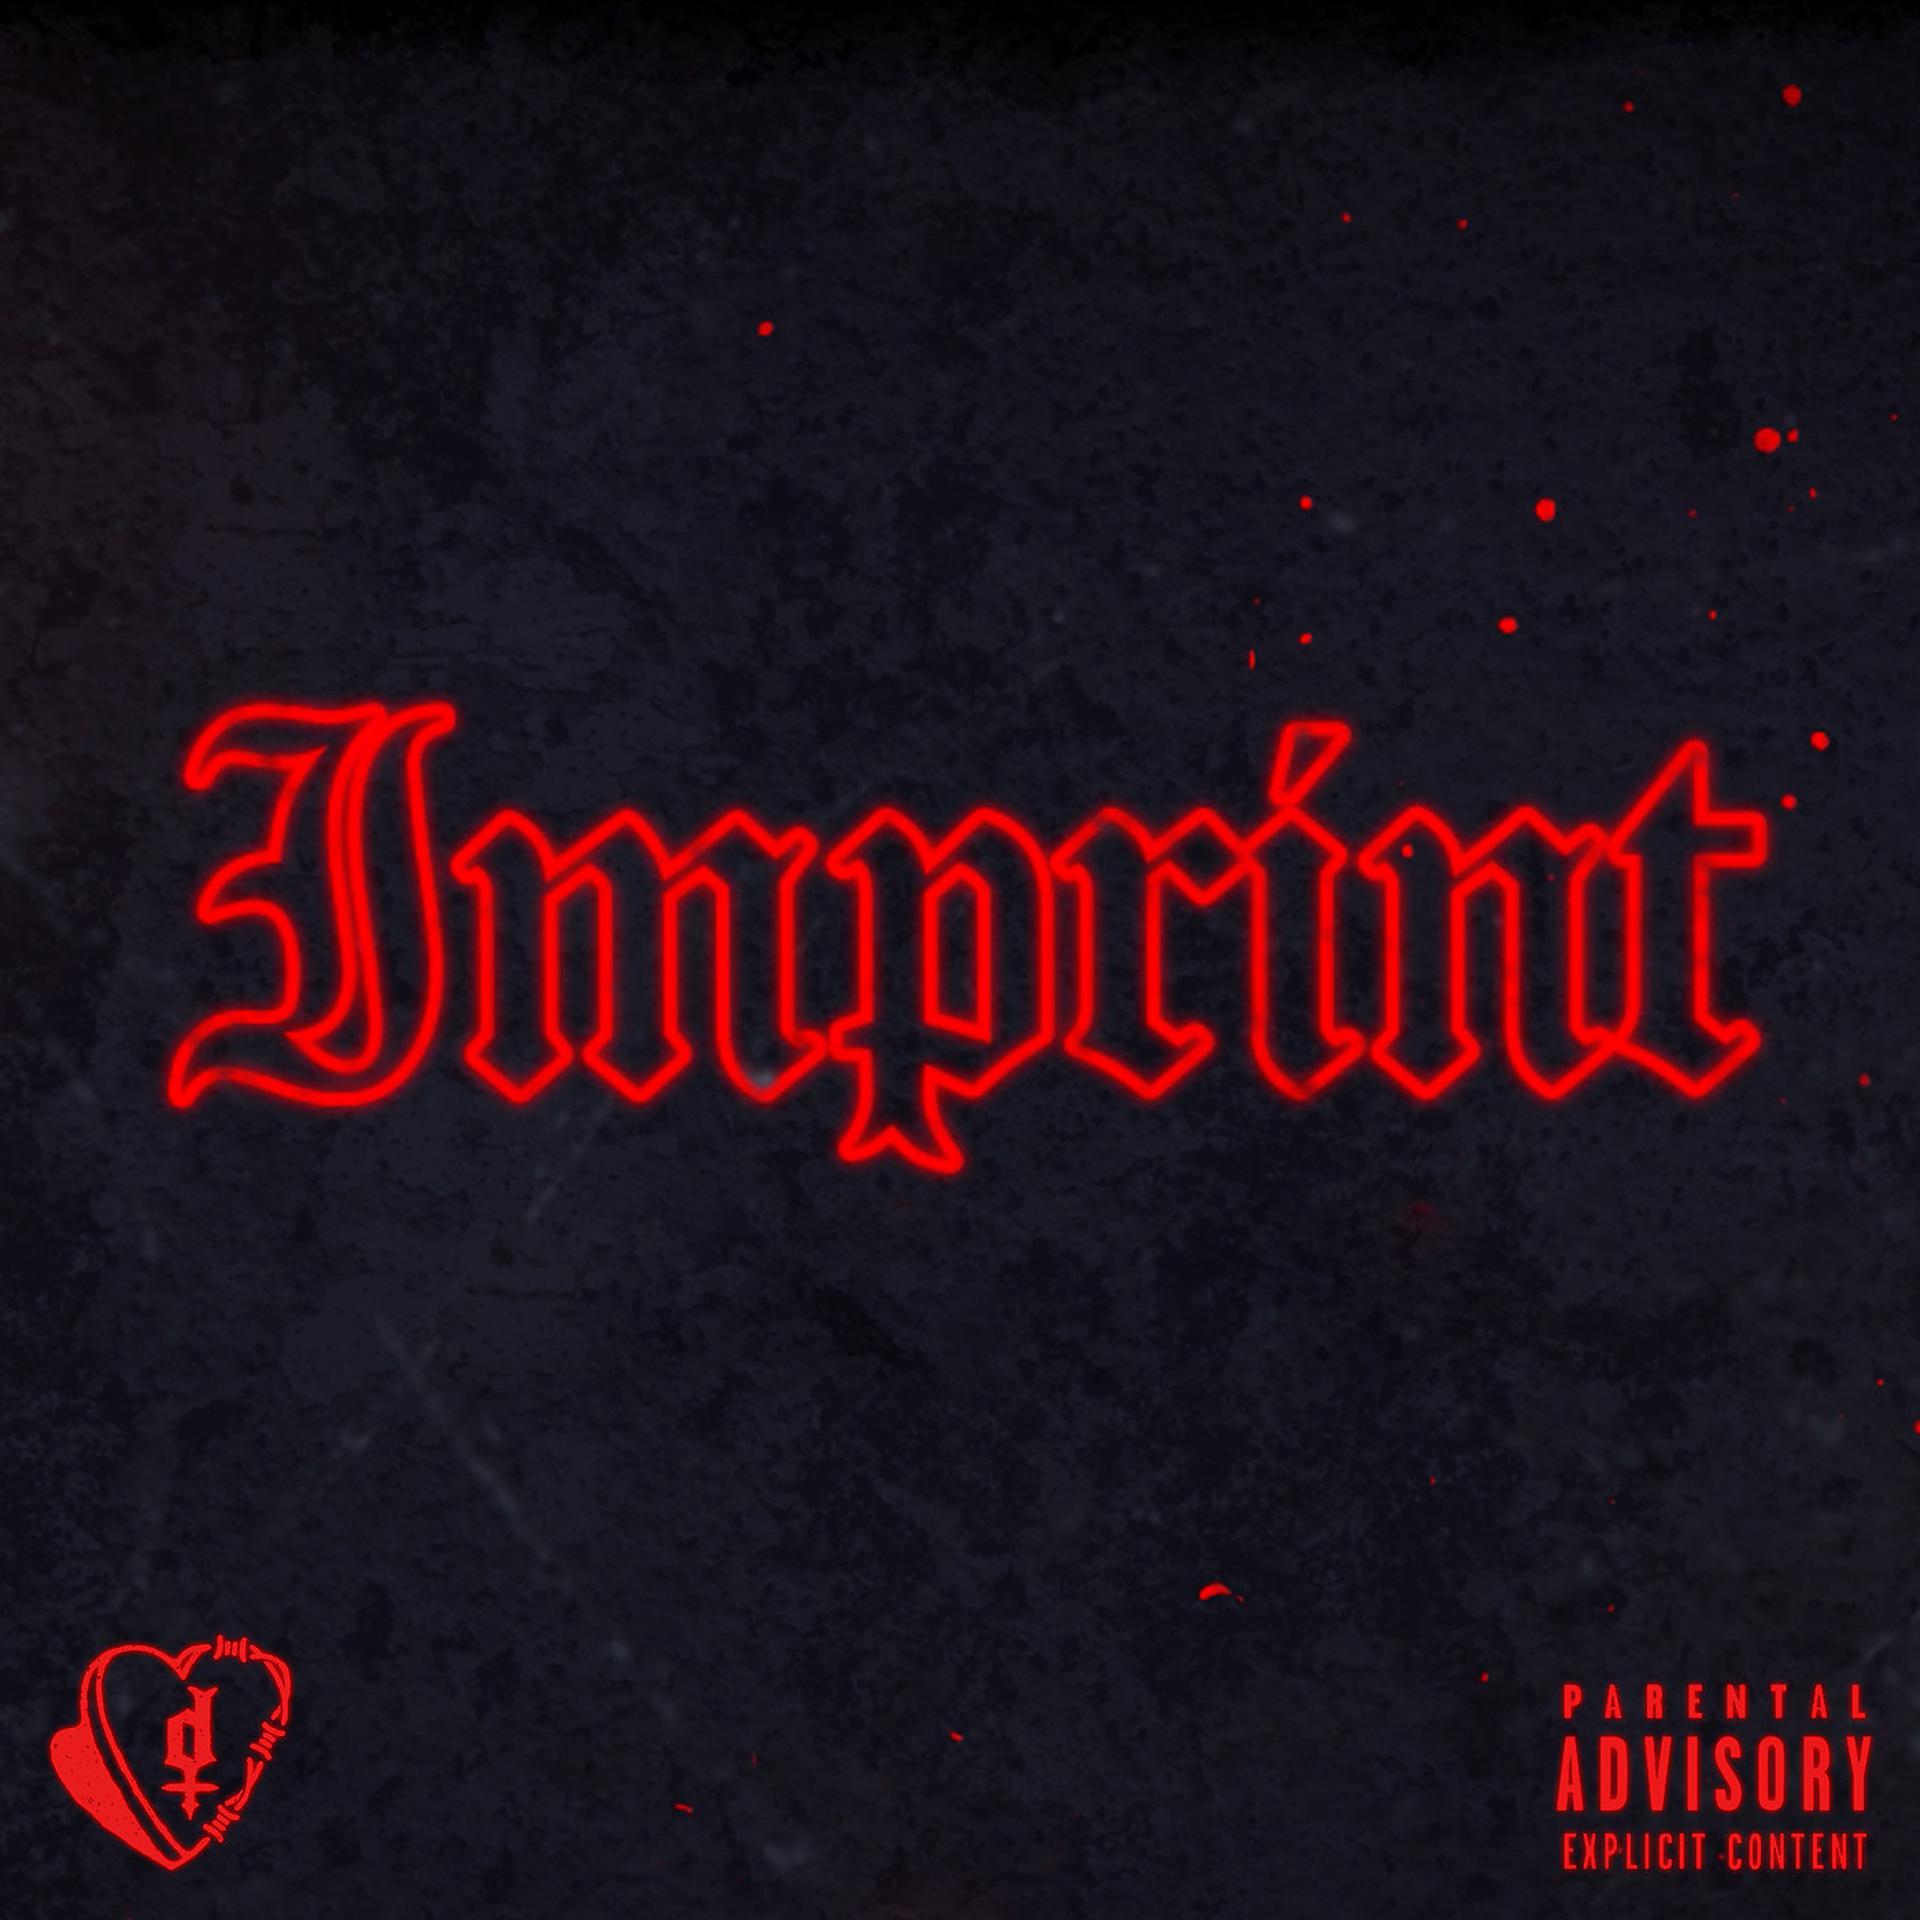 Постер альбома Imprint